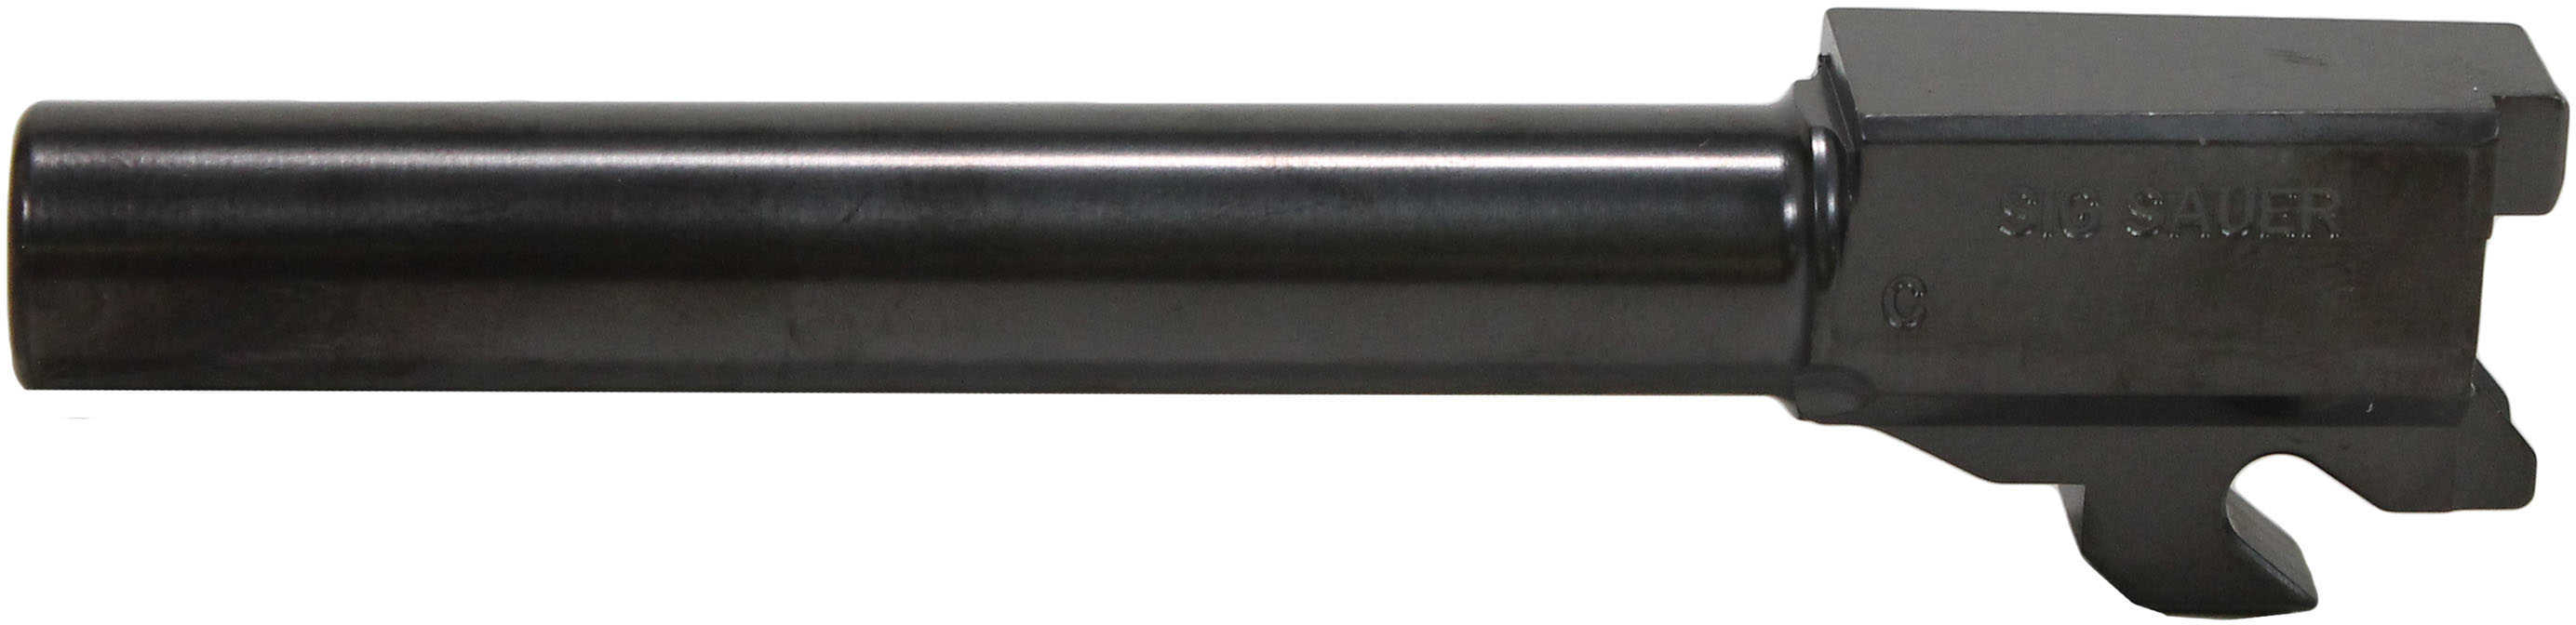 Sig Sauer BBLMODF9 P320 Full Size Barrel 9mm 4.7" Black